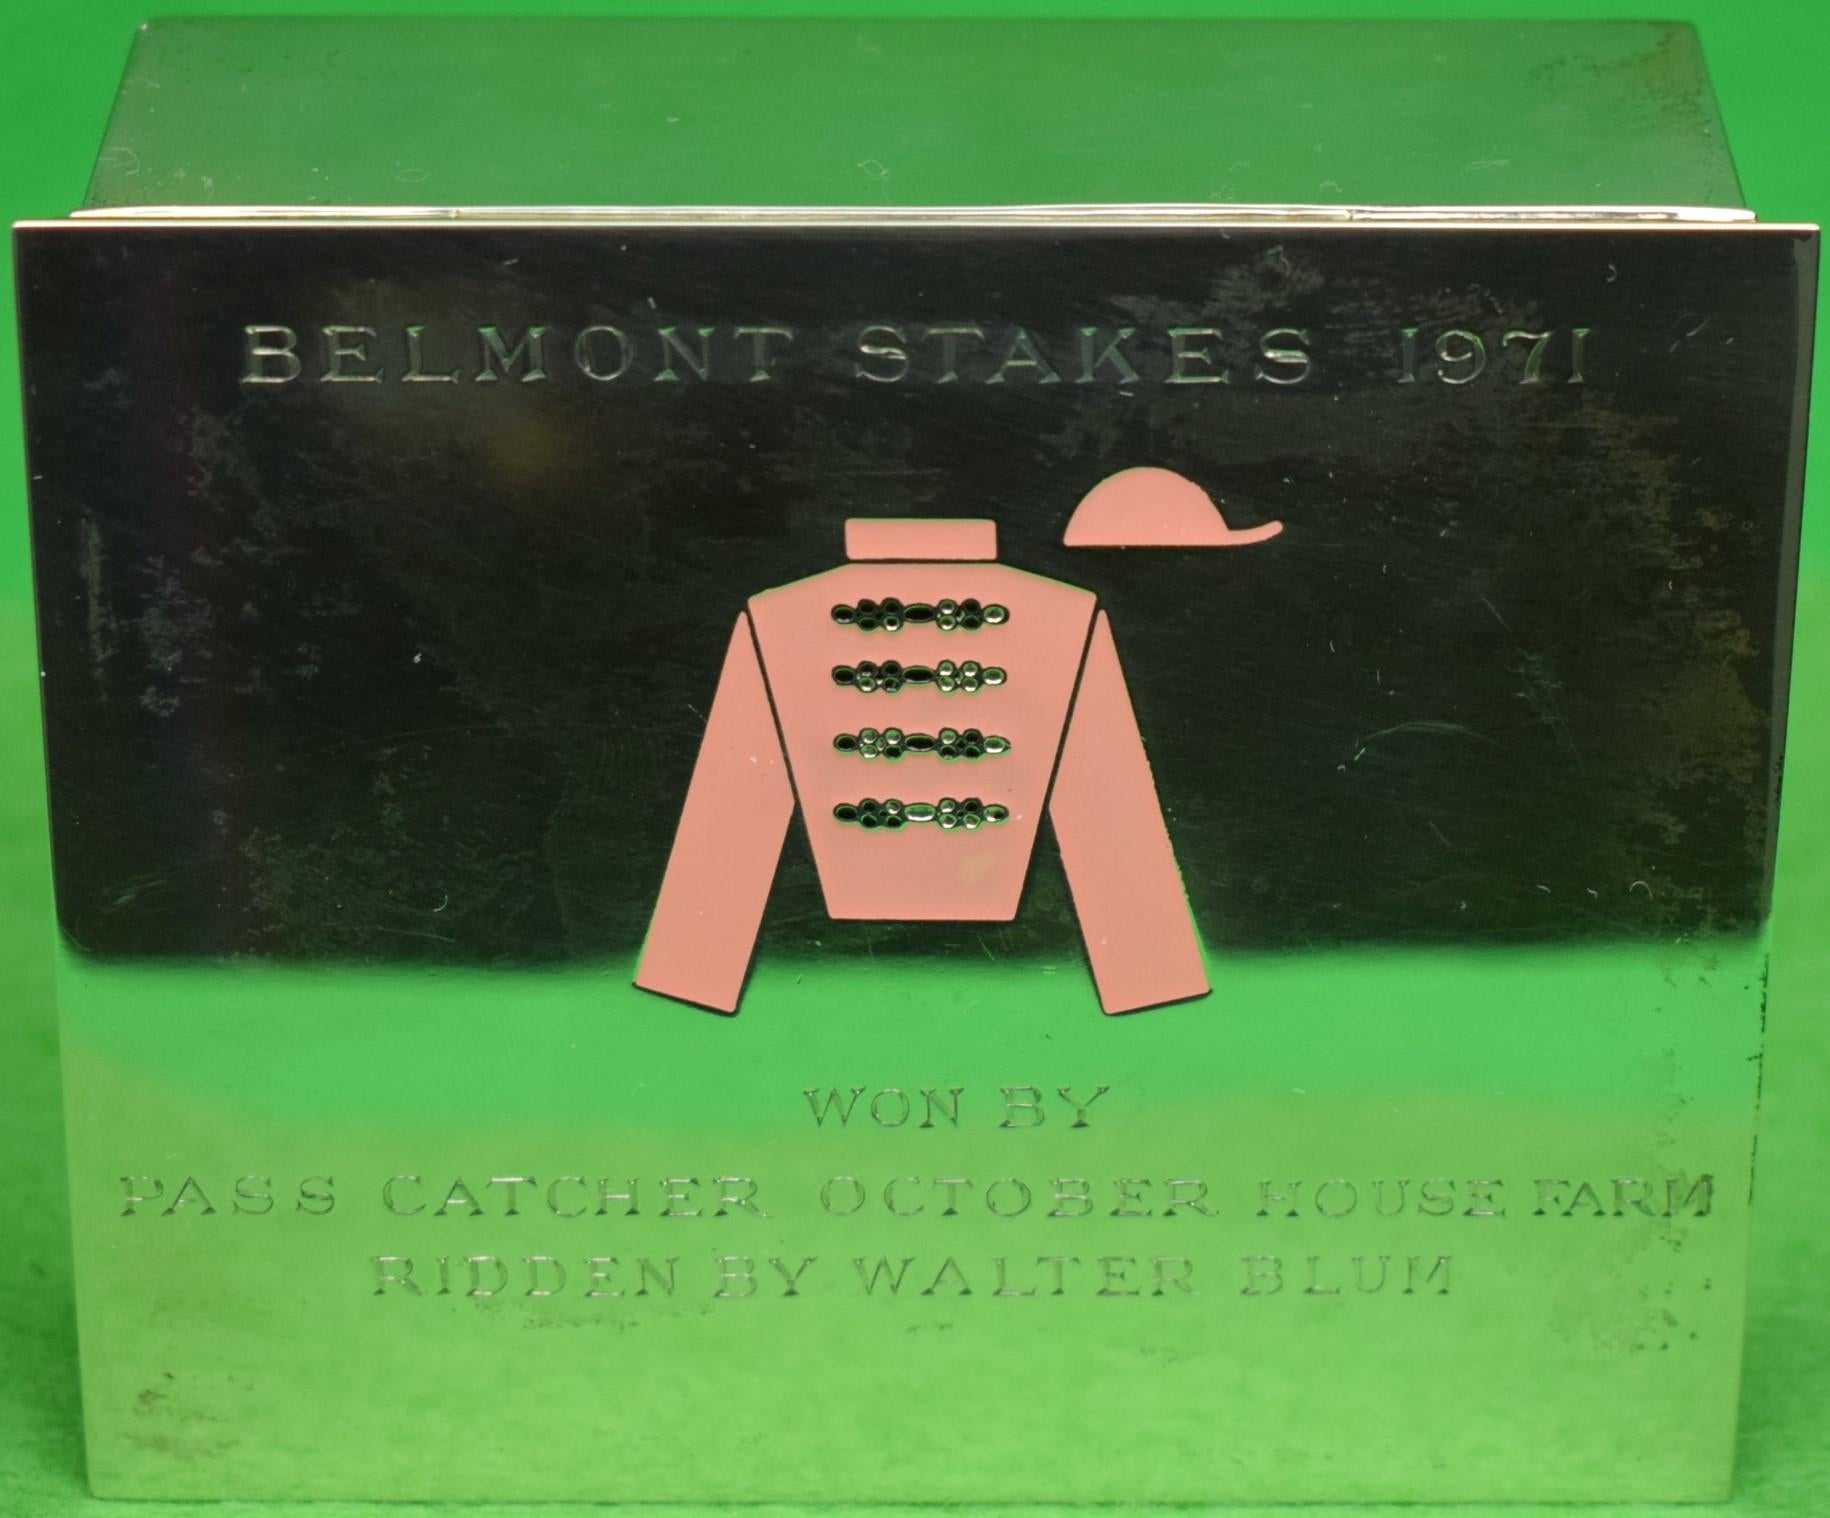 "Tiffany & Co 1971 Belmont Stakes Sterling Silver Jockey Presentation Box" - Art by Unknown